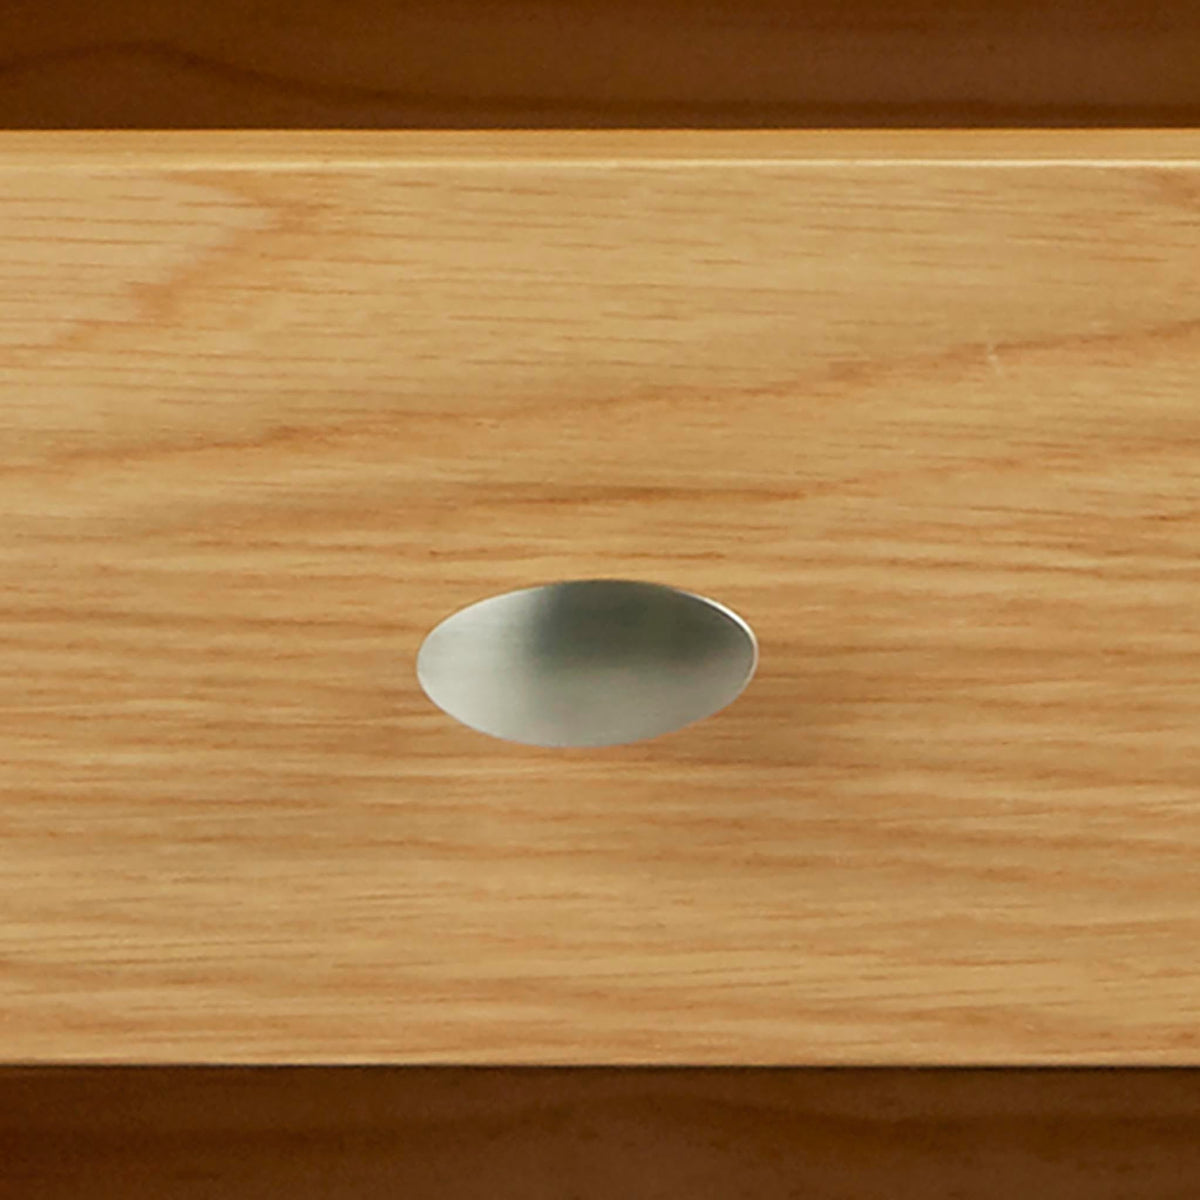 Alba Oak Lamp Table - Close up of drawer knob